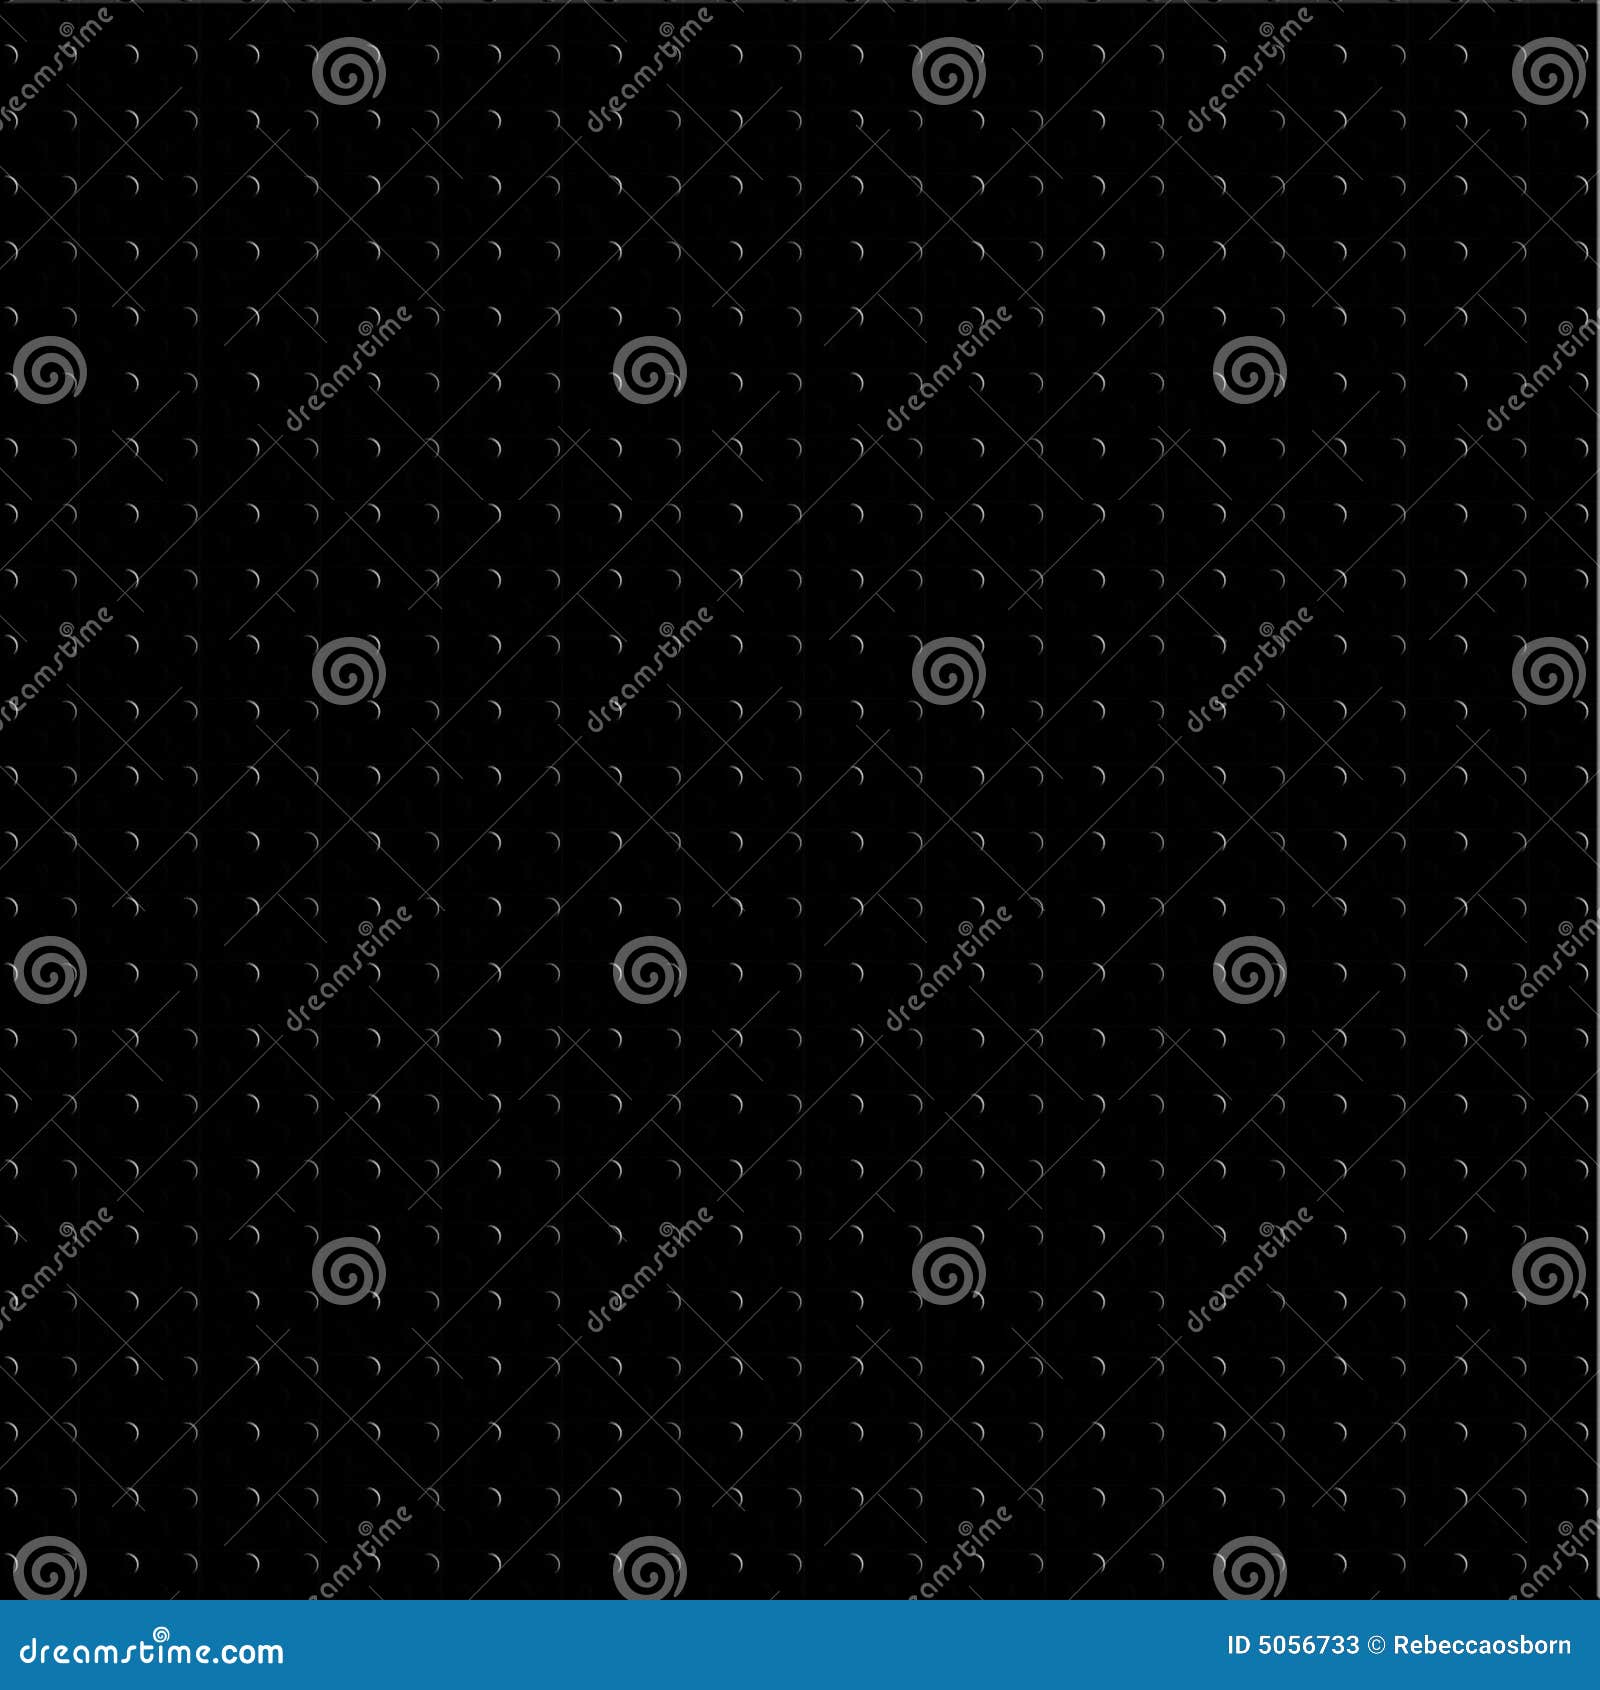 Black Polka Dot Background stock illustration. Illustration of pattern - 5056733